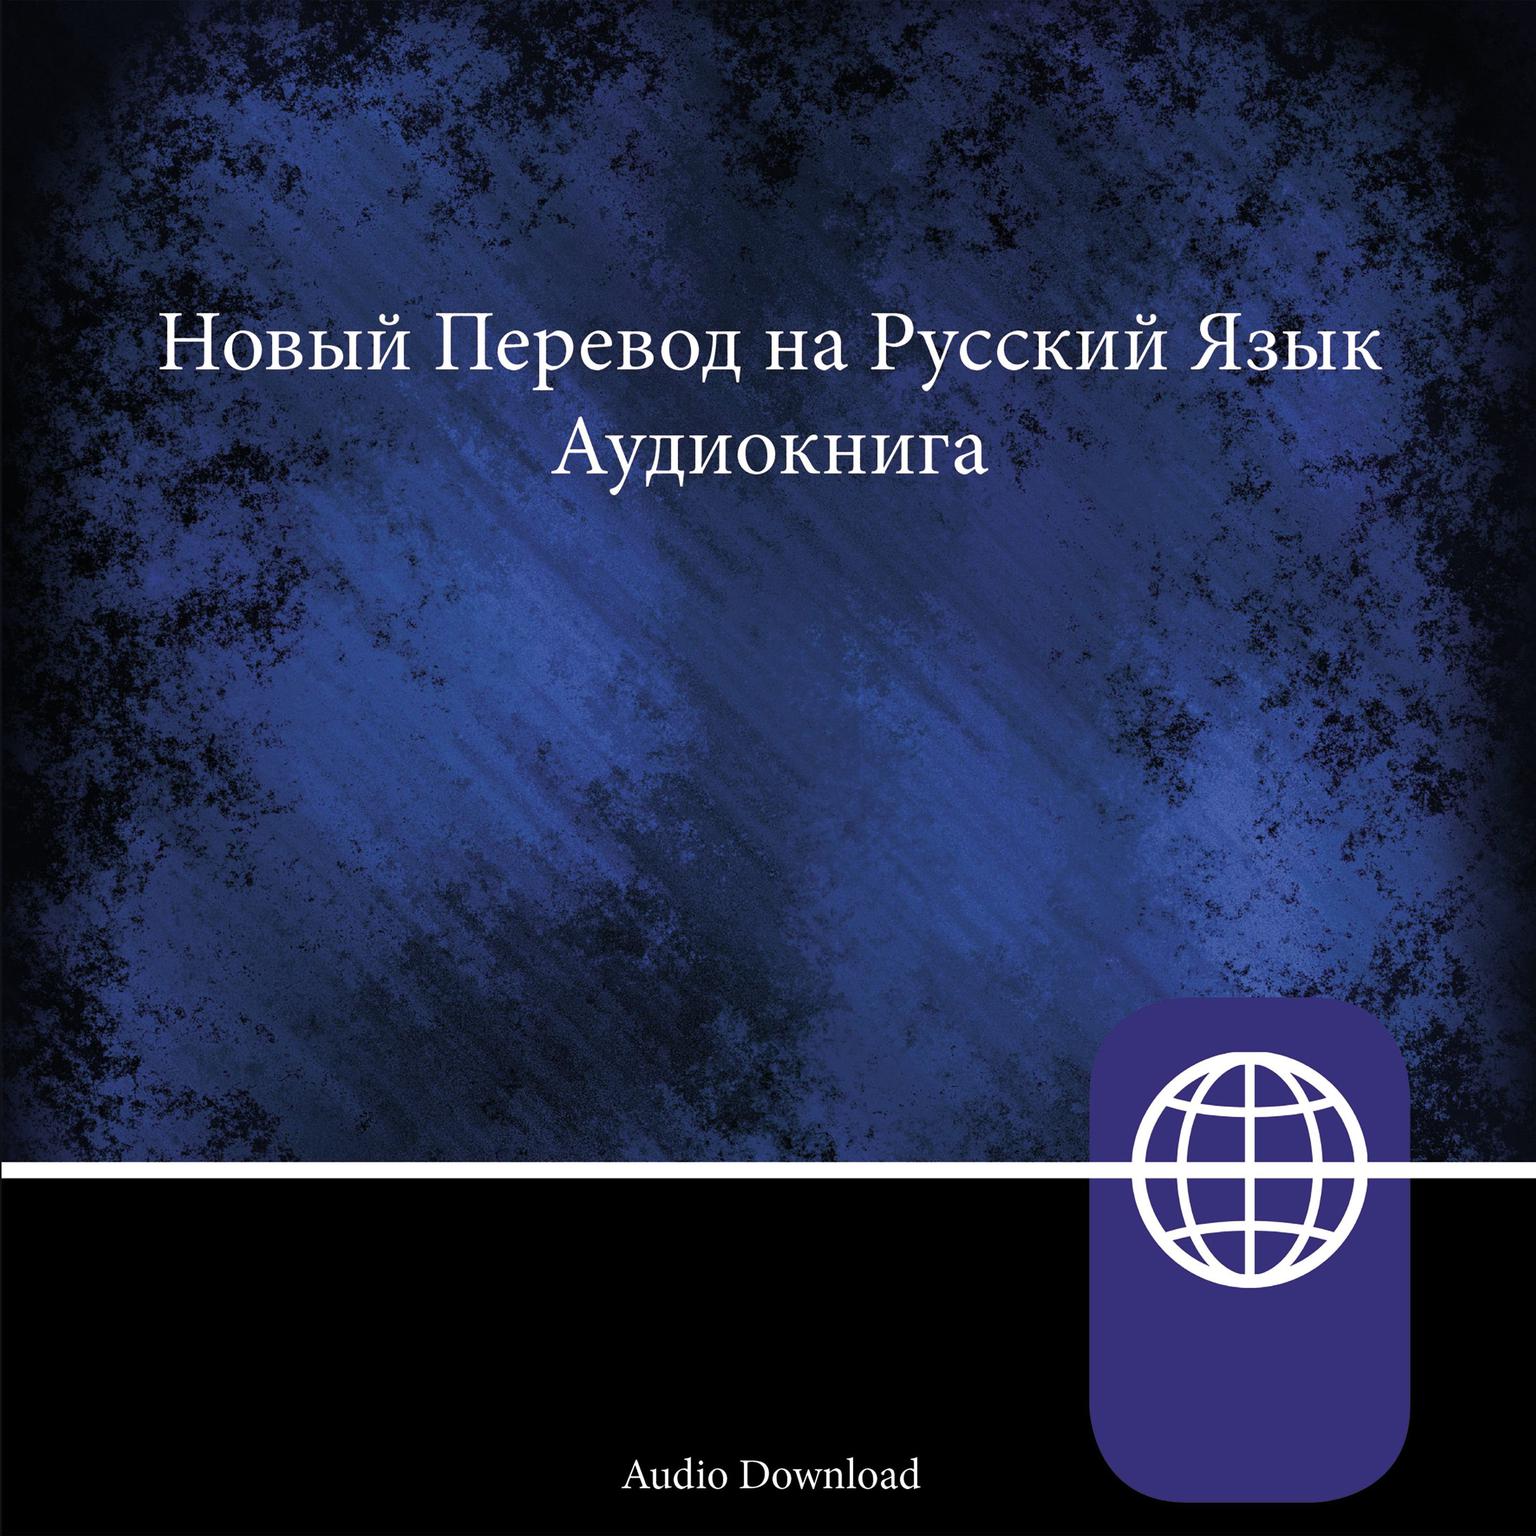 New Russian Translation, Audio Download Audiobook, by Zondervan